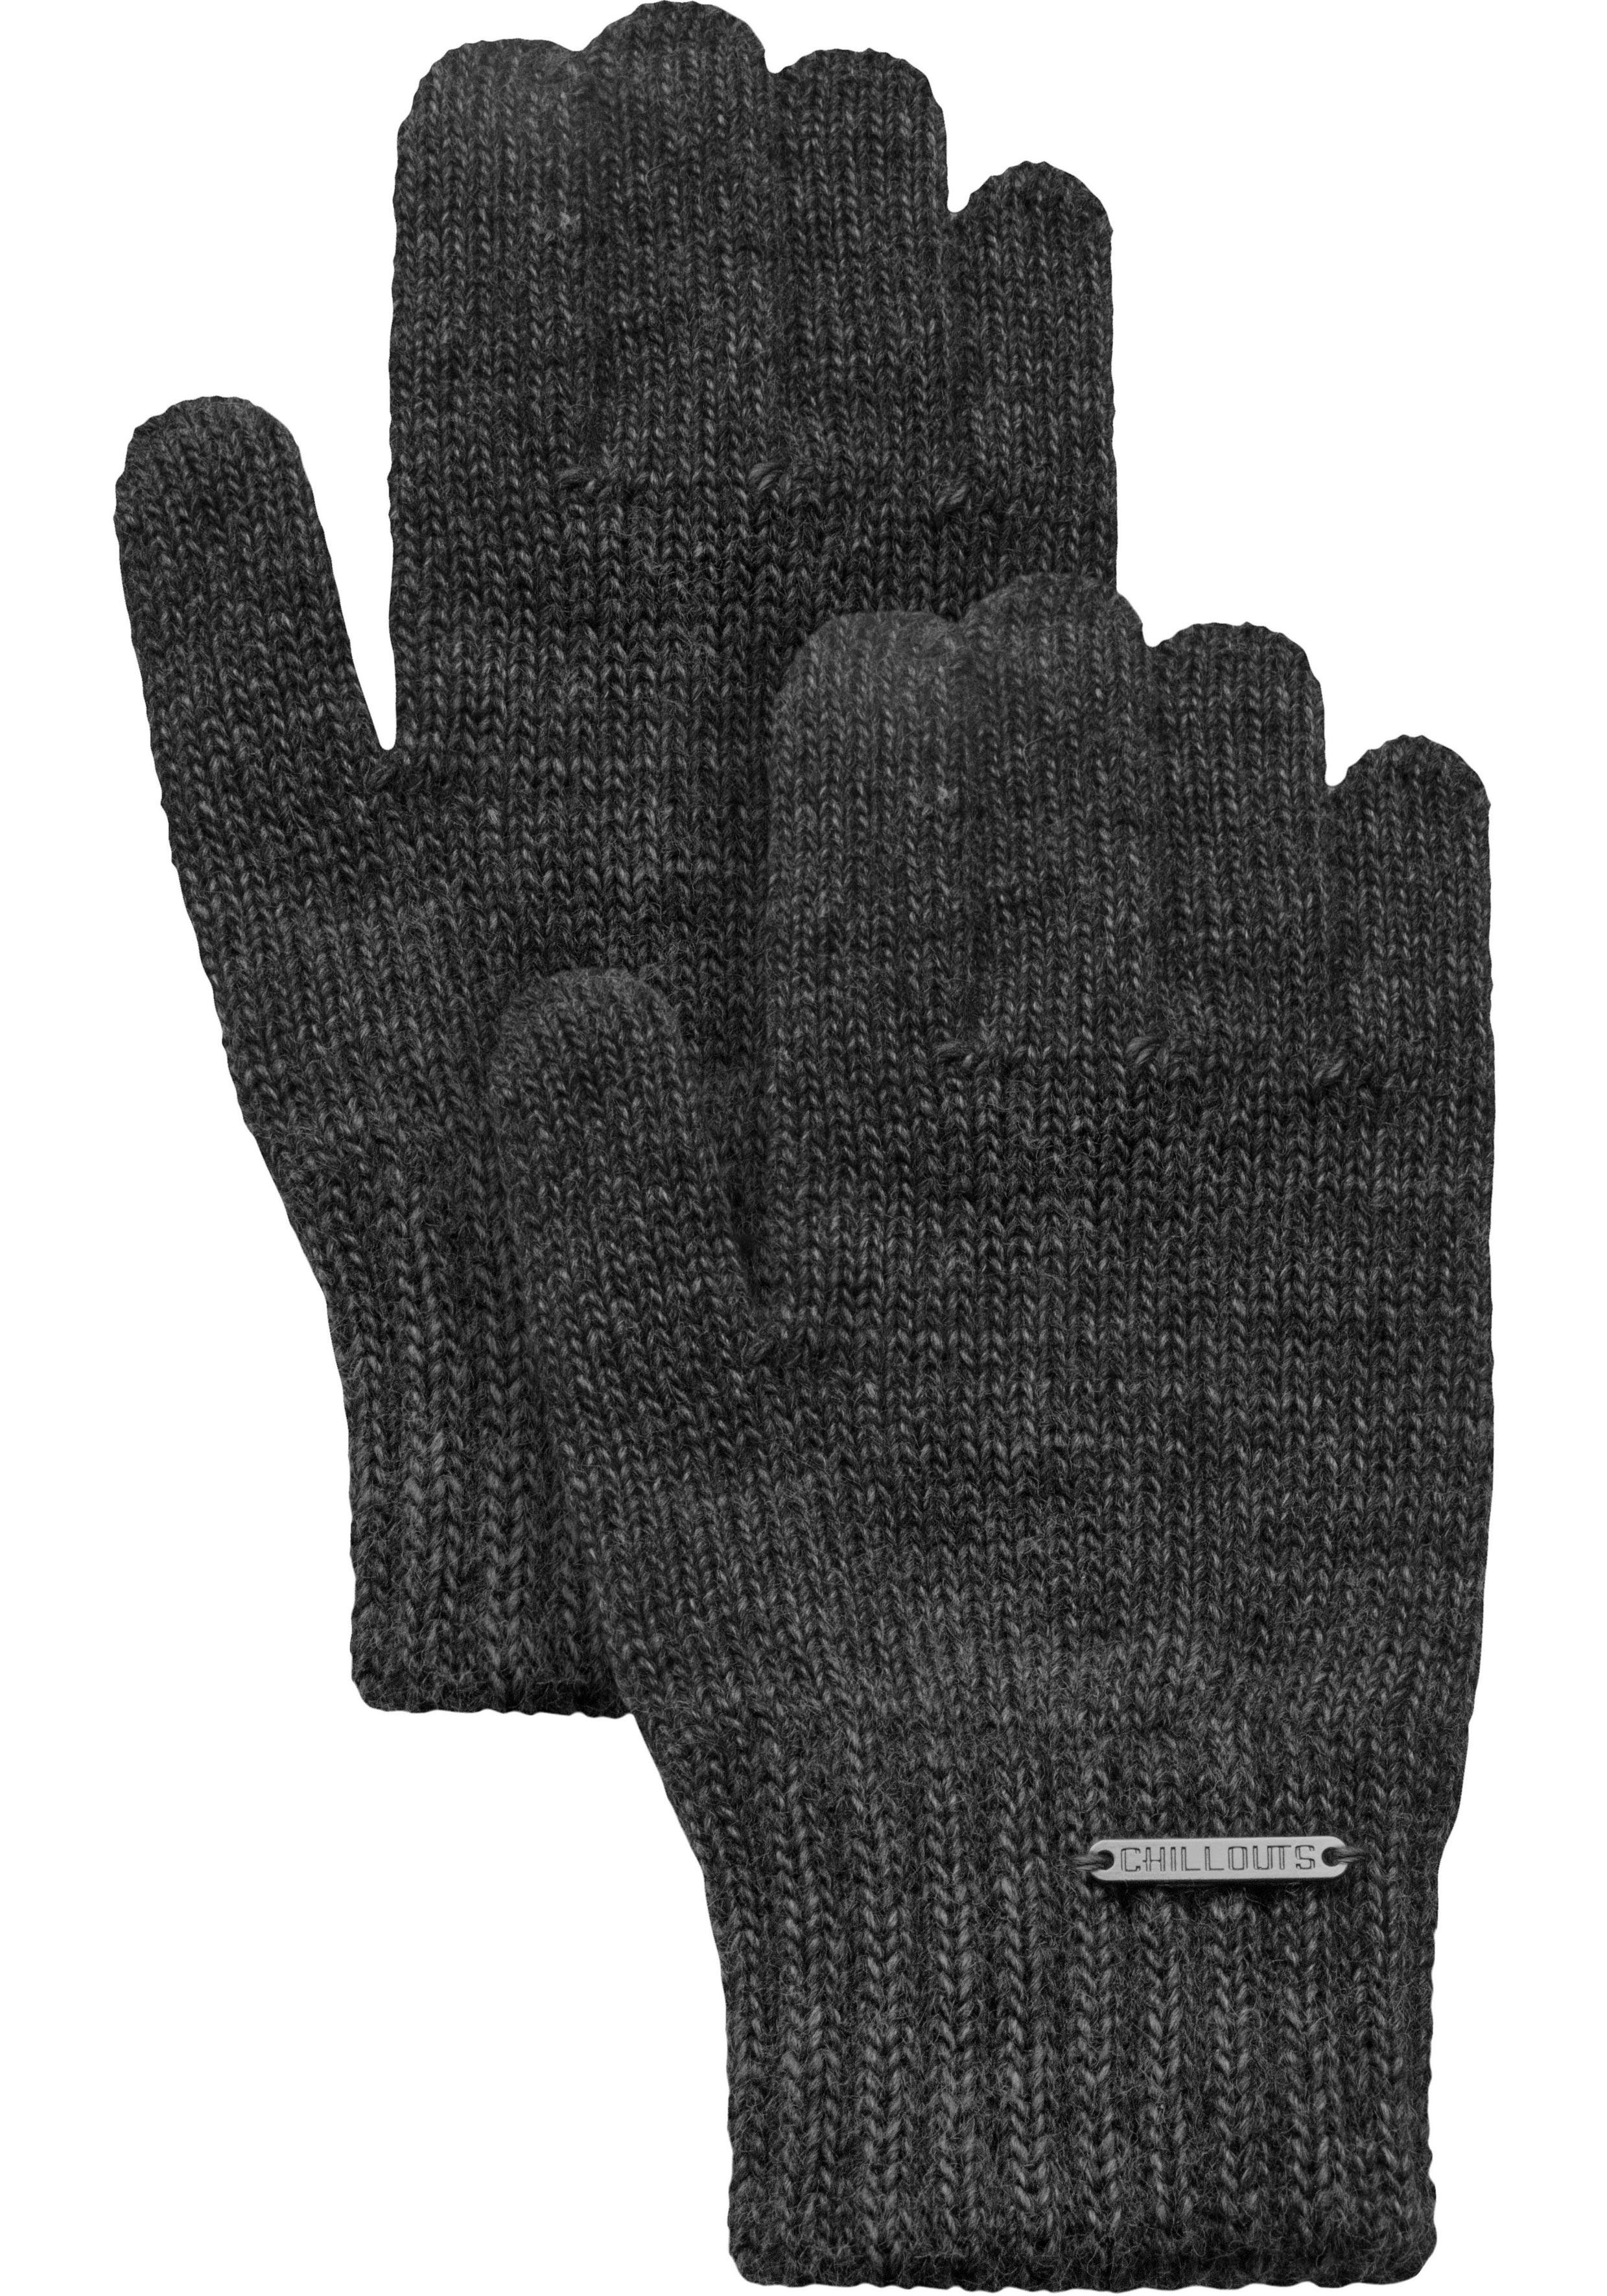 melange gestrickt dark Strickhandschuhe Jamila chillouts grey Fingerhandschuhe, Glove